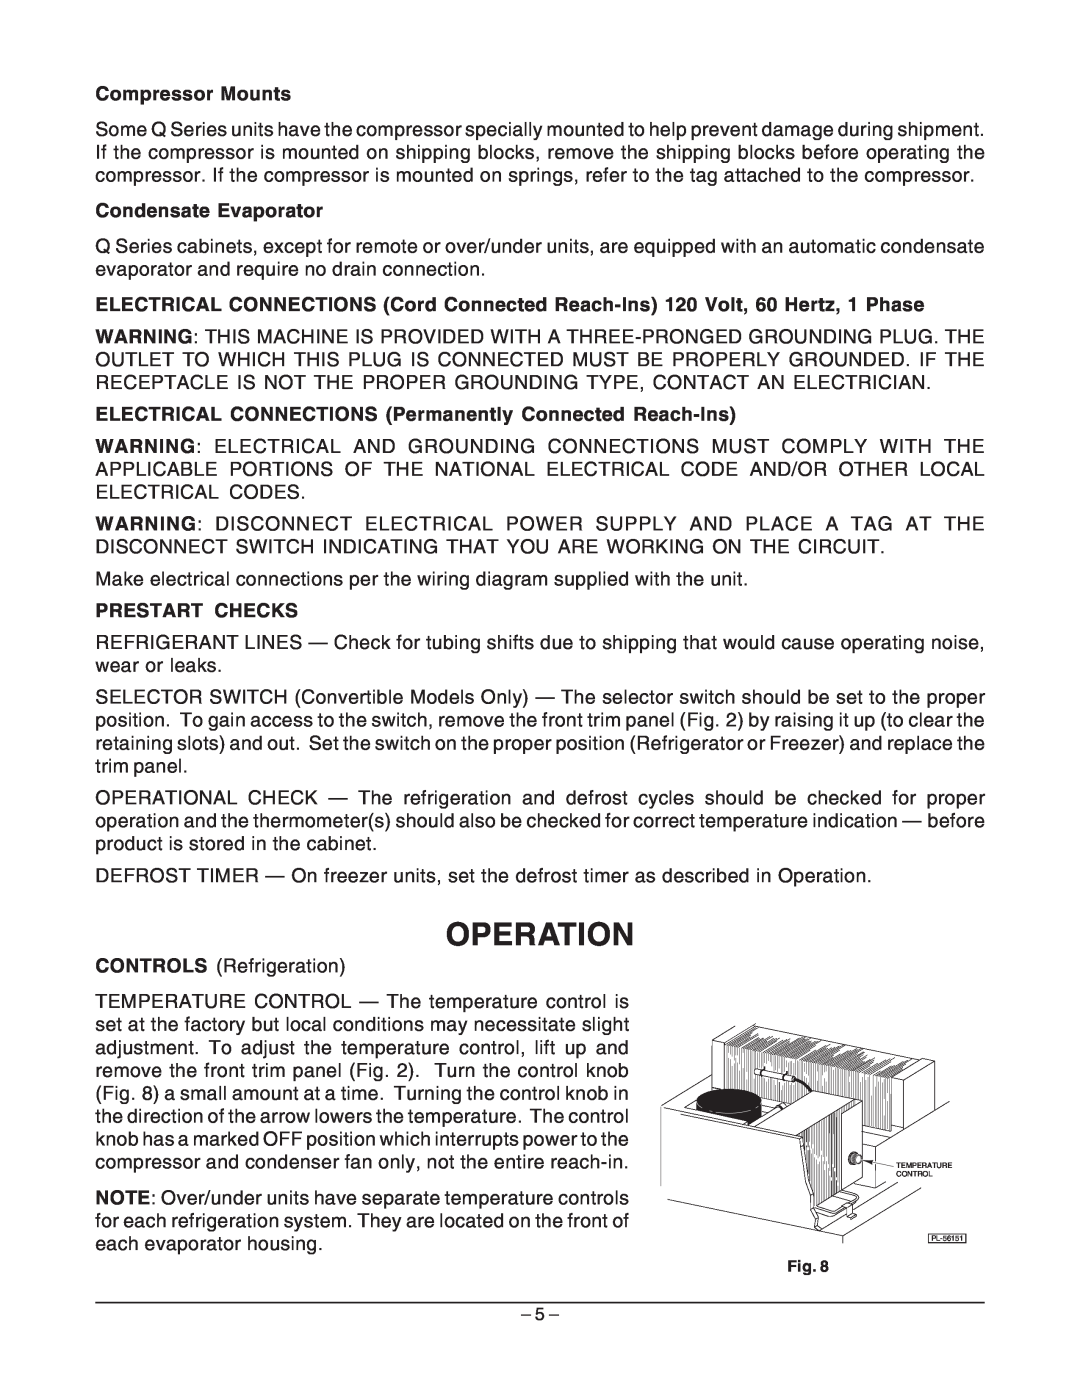 Hobart Q Series manual Operation, Compressor Mounts, Condensate Evaporator, Prestart Checks 